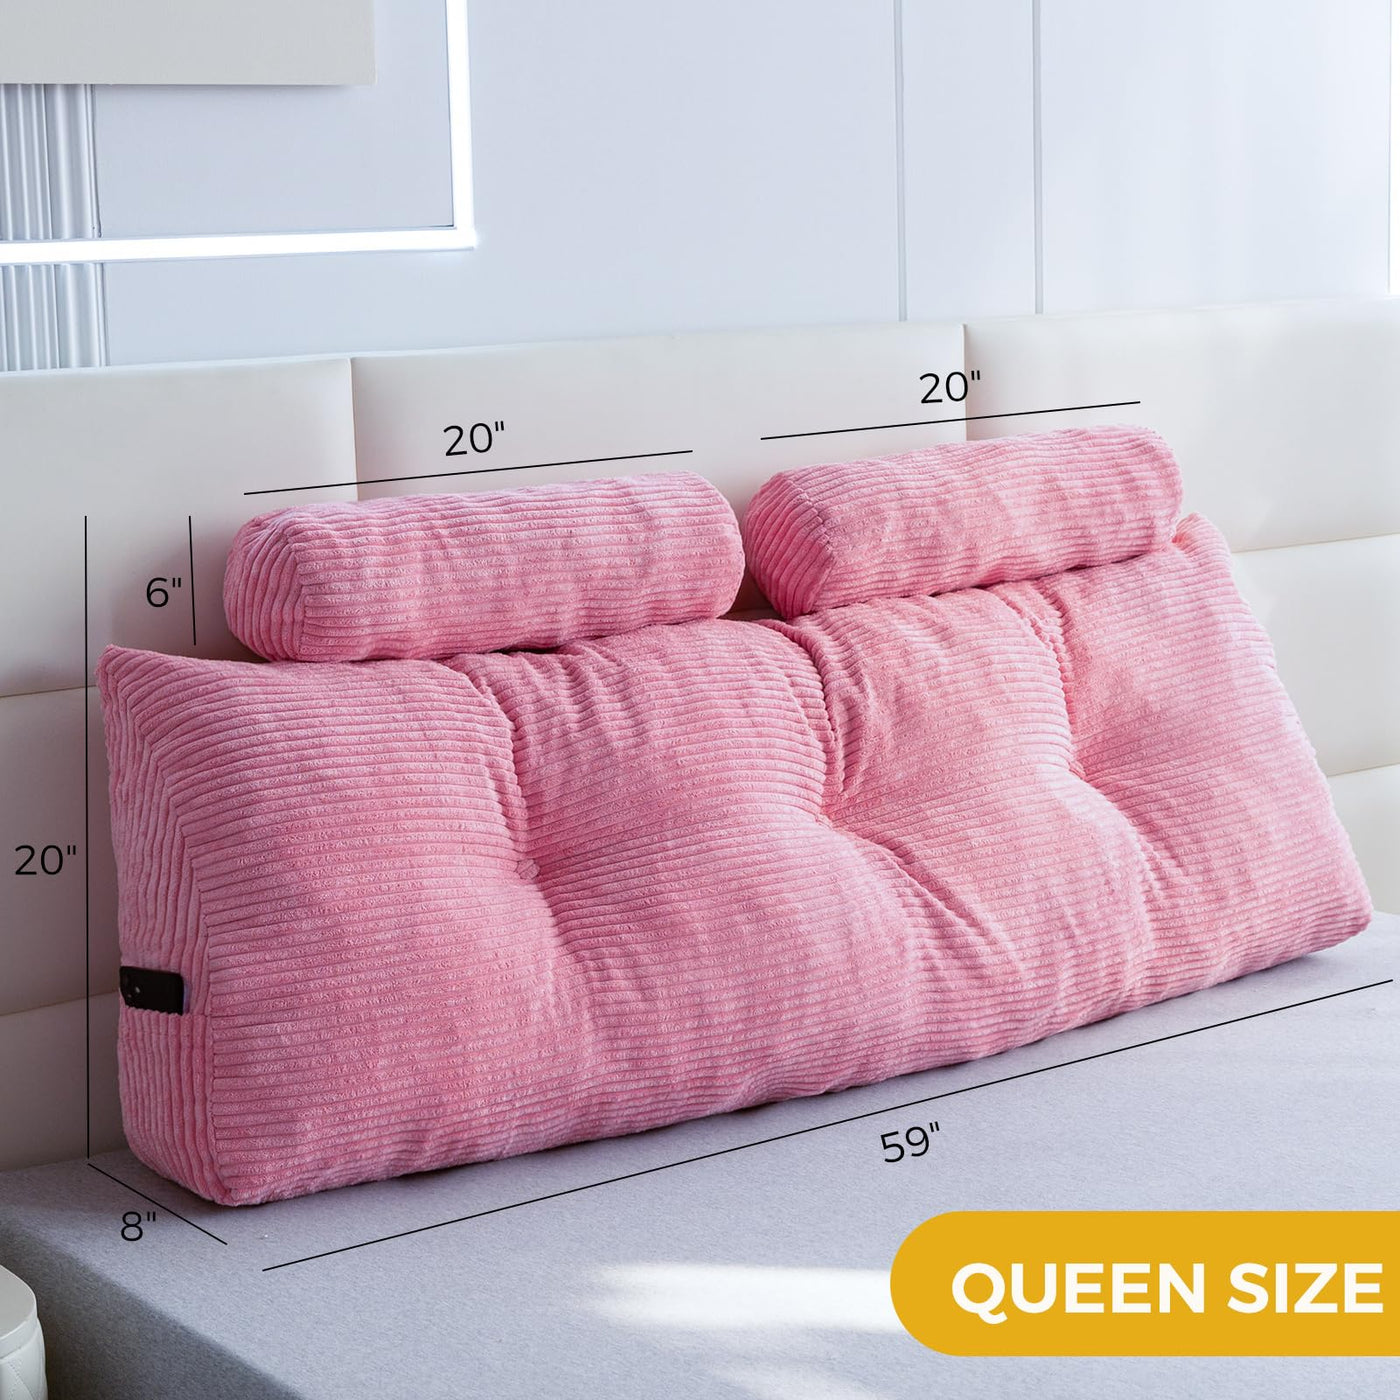 wedge pillow#size_queen